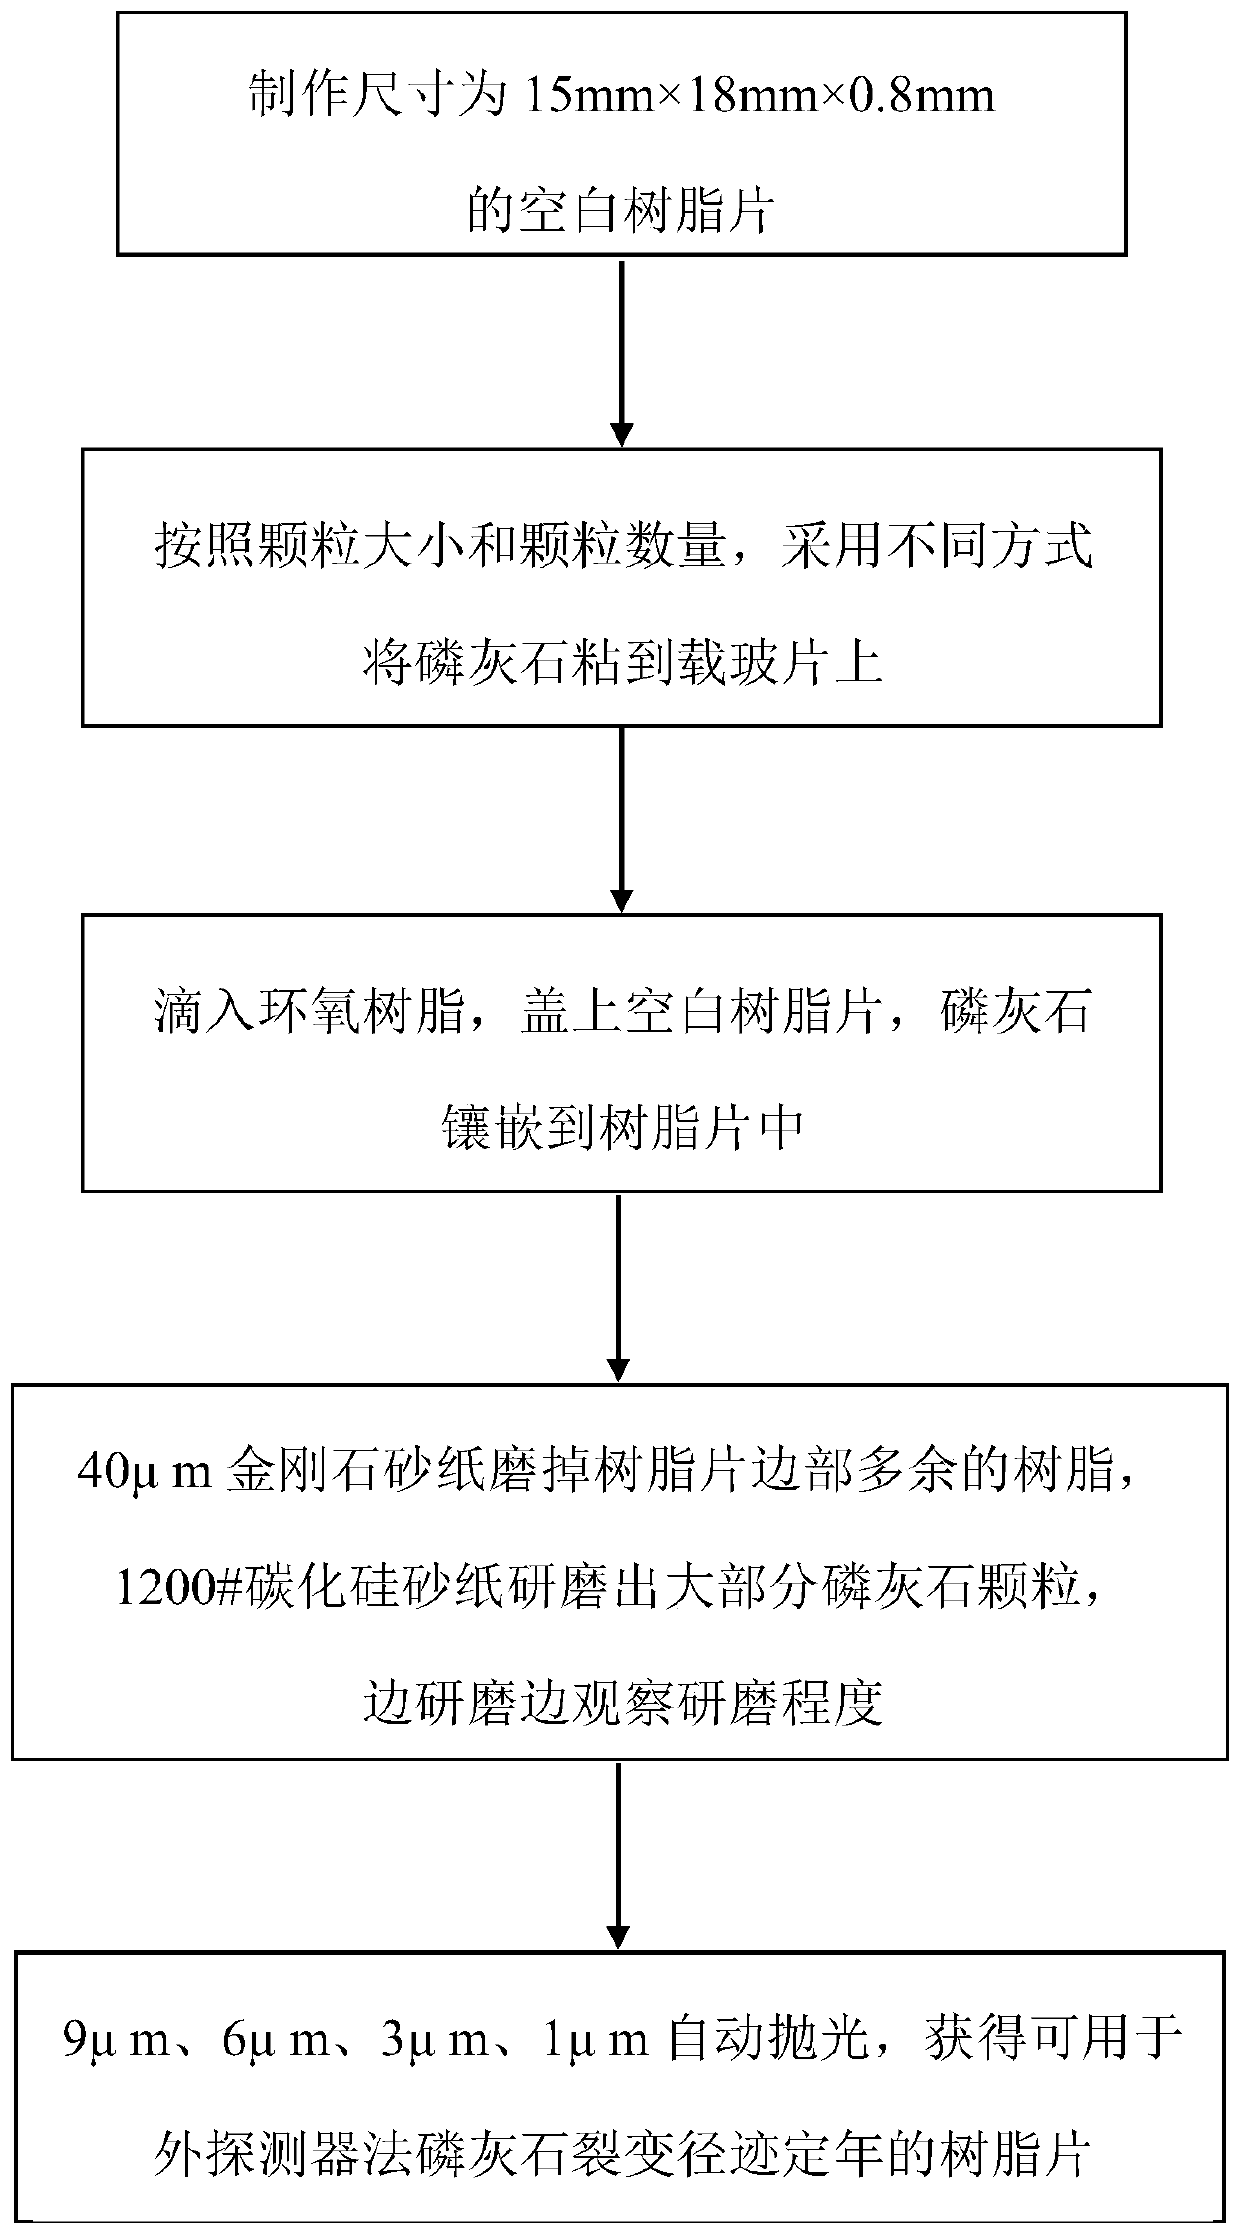 Preparation method of apatite resin sheet for external detector method